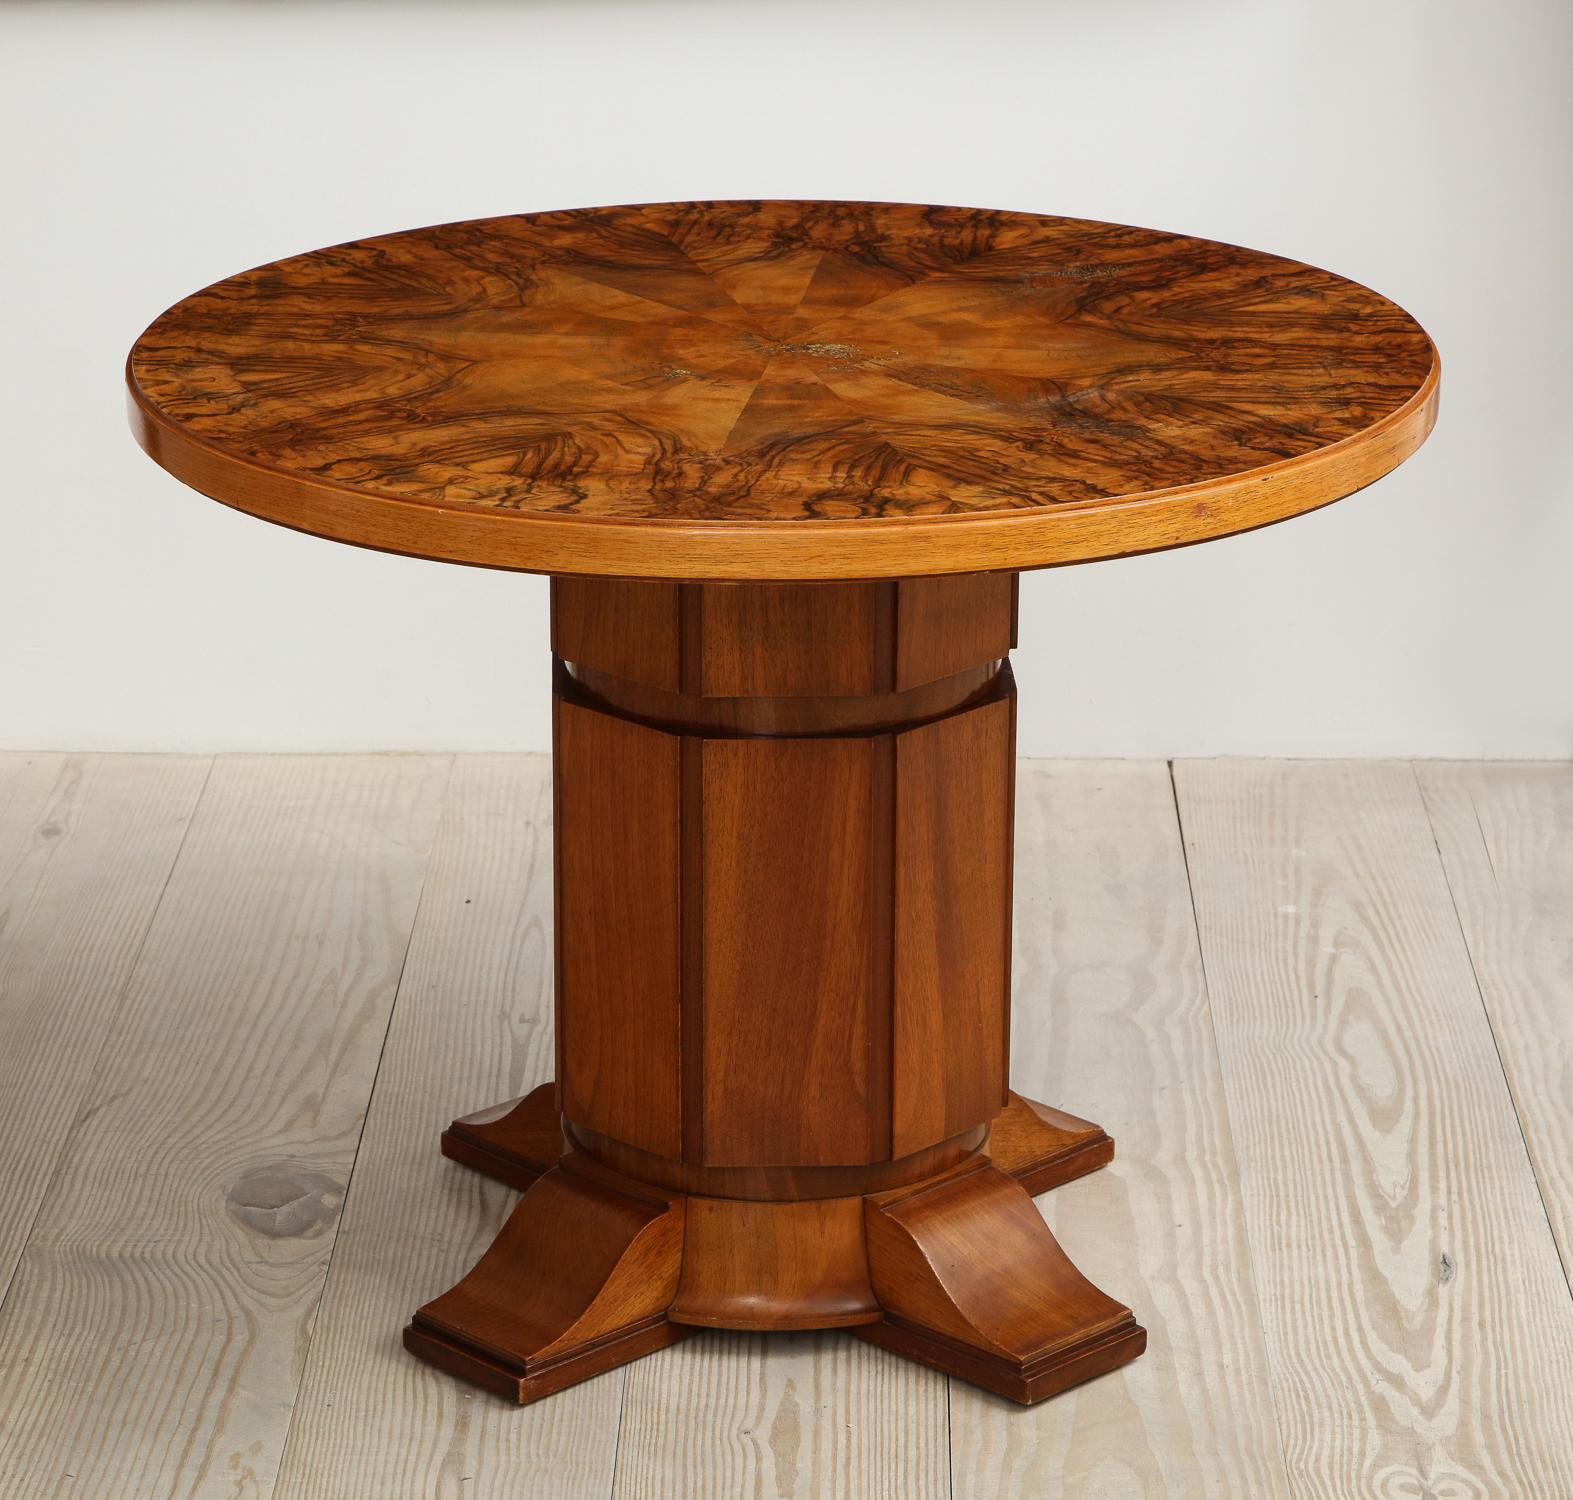 Johan Gudmann Rohde (1856 Randers - Hellerup, Denmark 1835), table with centre pillar, origin: Denmark, circa 1900 - 1920, mahogany with table top of root veneer in star pattern.